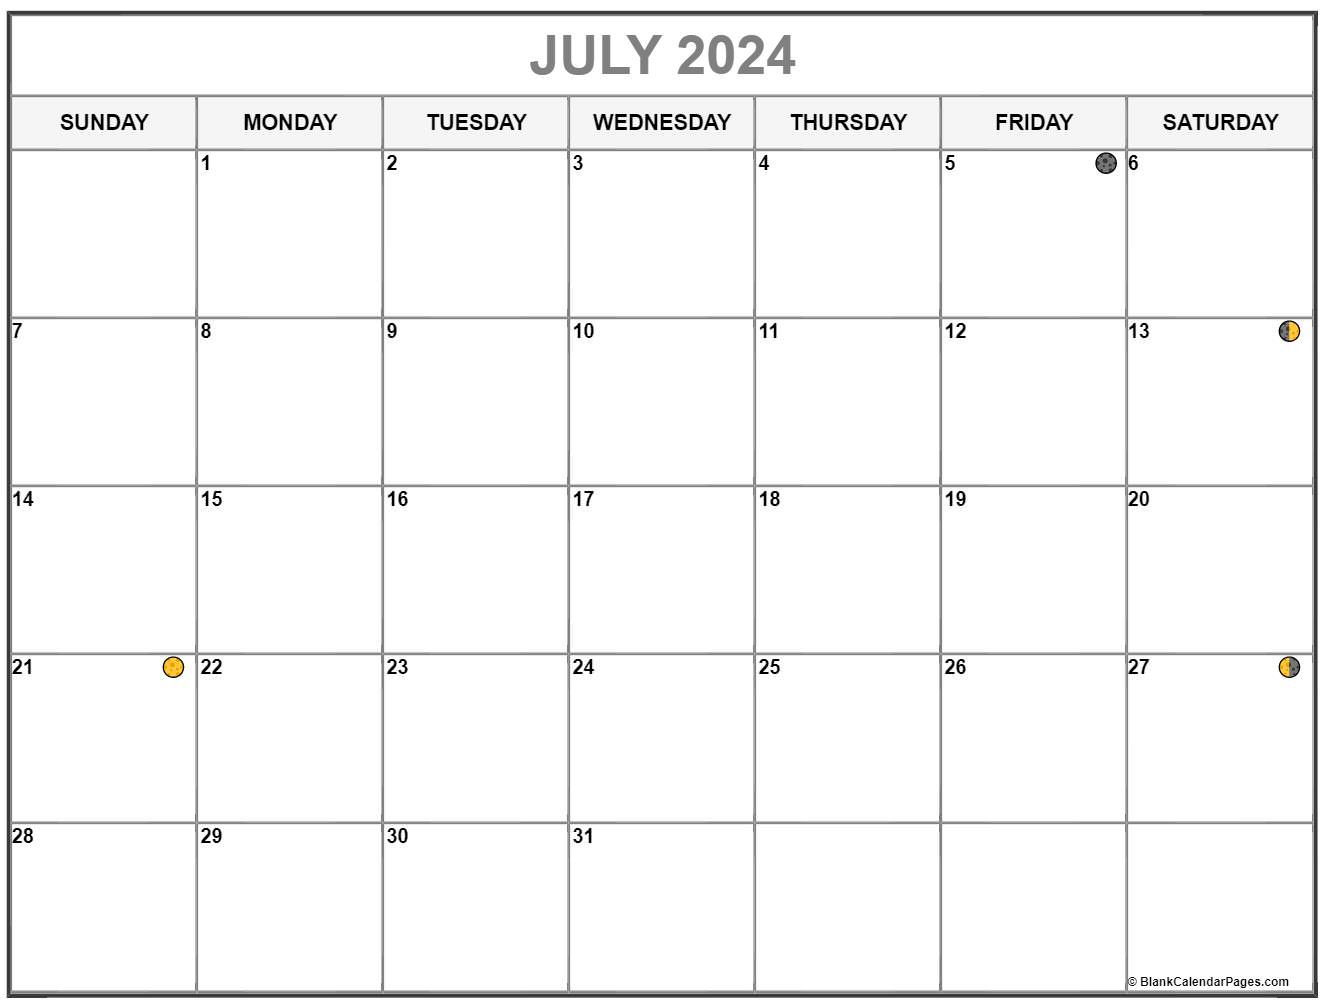 July 2024 Lunar Calendar | Moon Phase Calendar for July 17 Lunar Calendar 2024